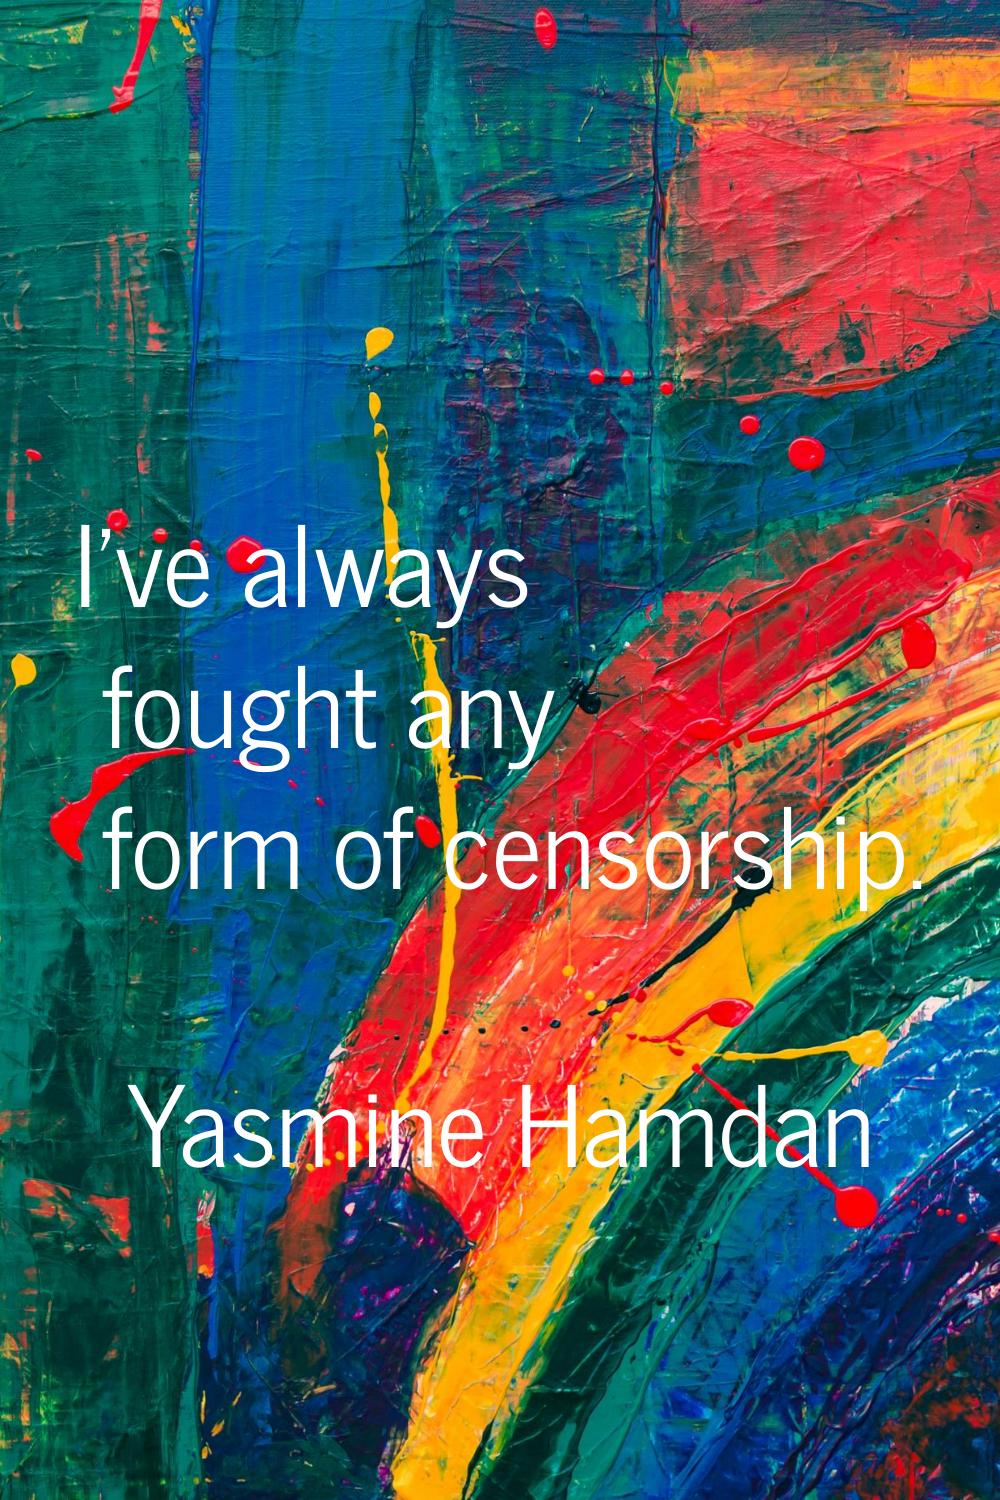 I've always fought any form of censorship.